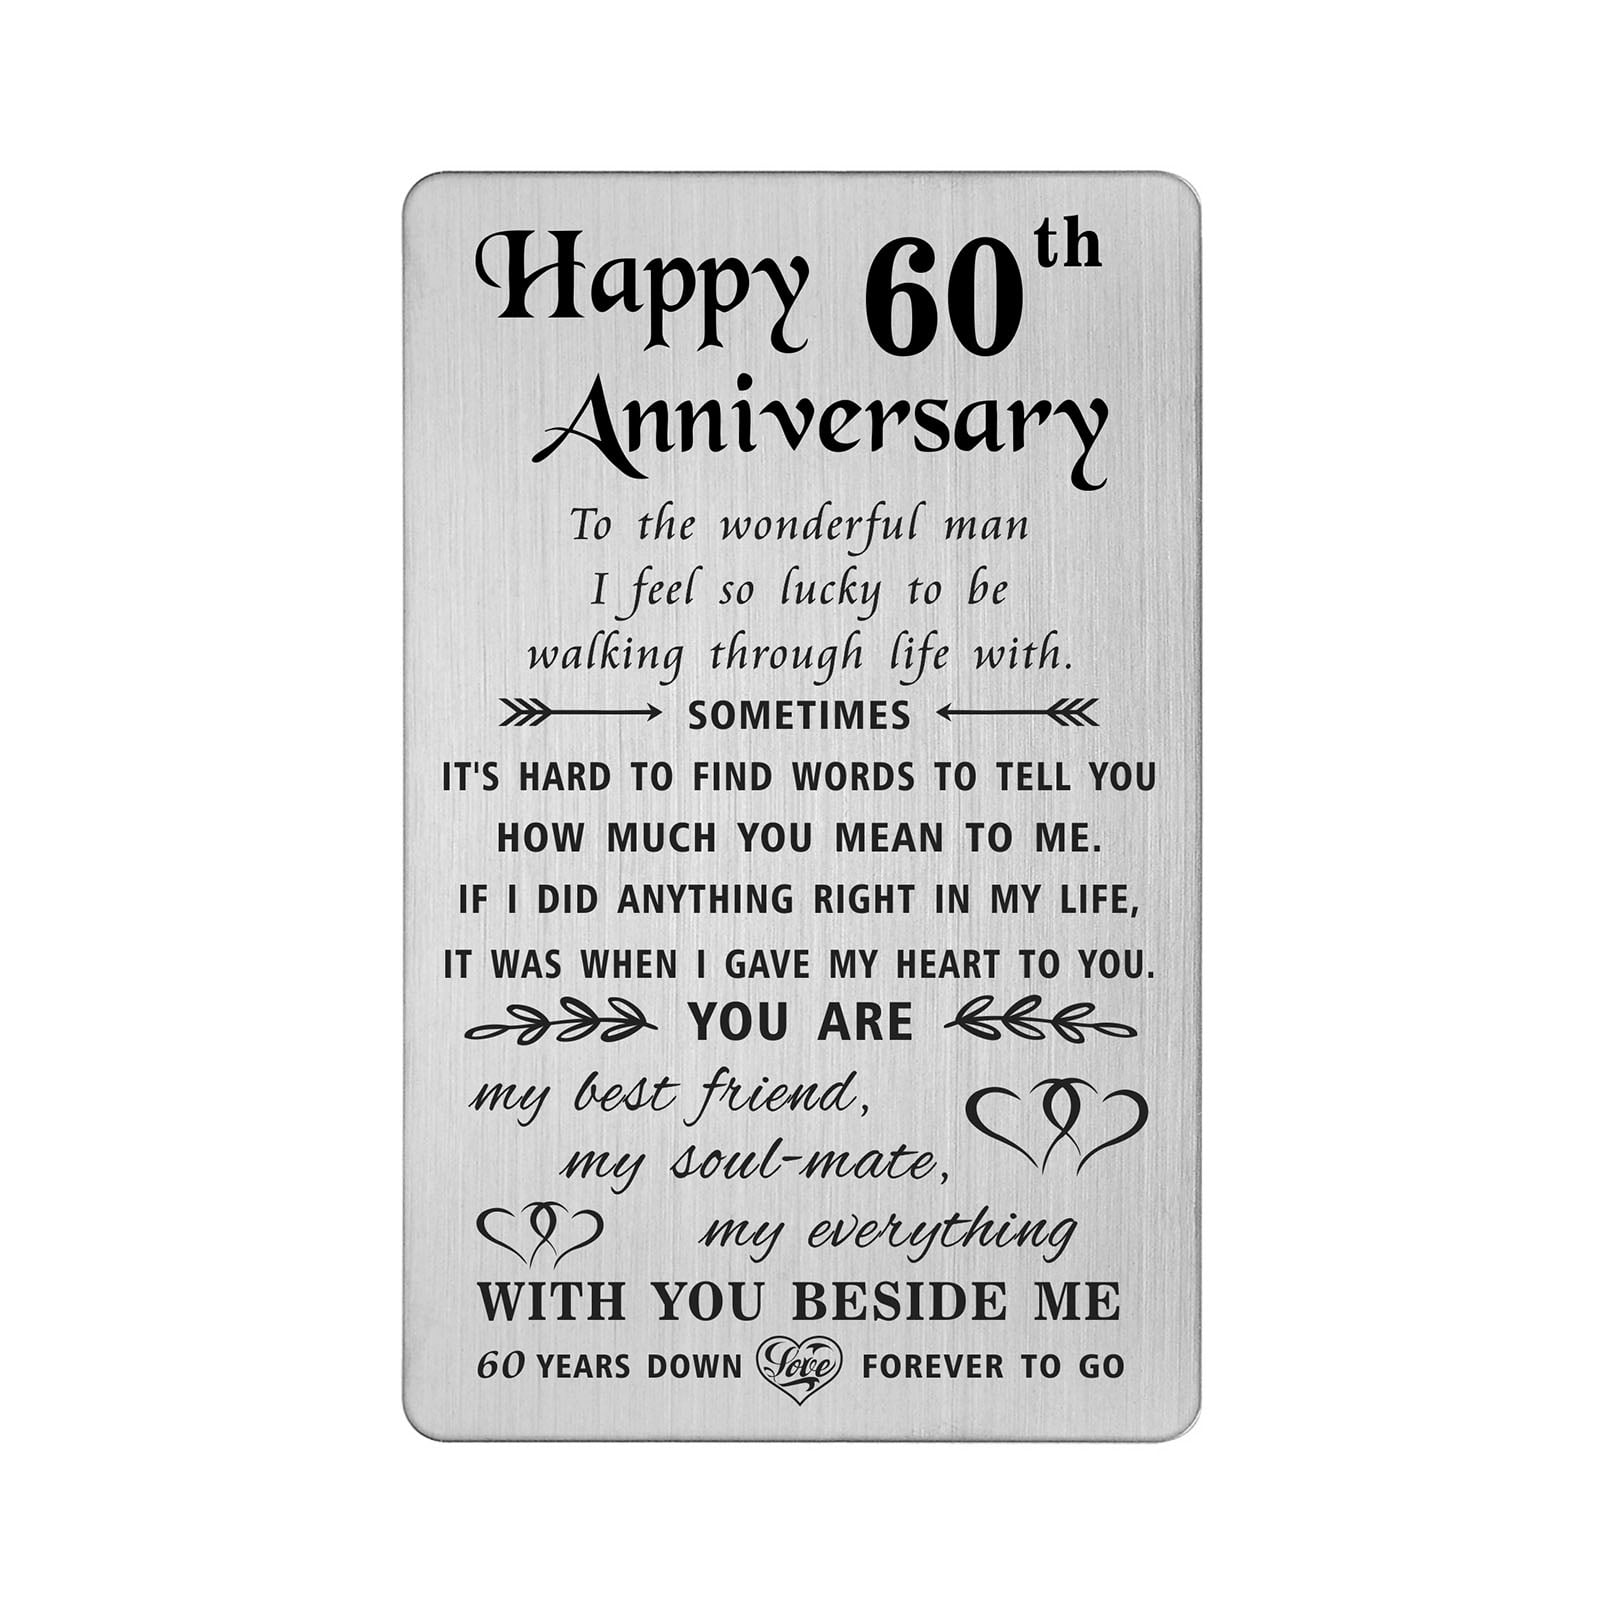 60th anniversary wishes